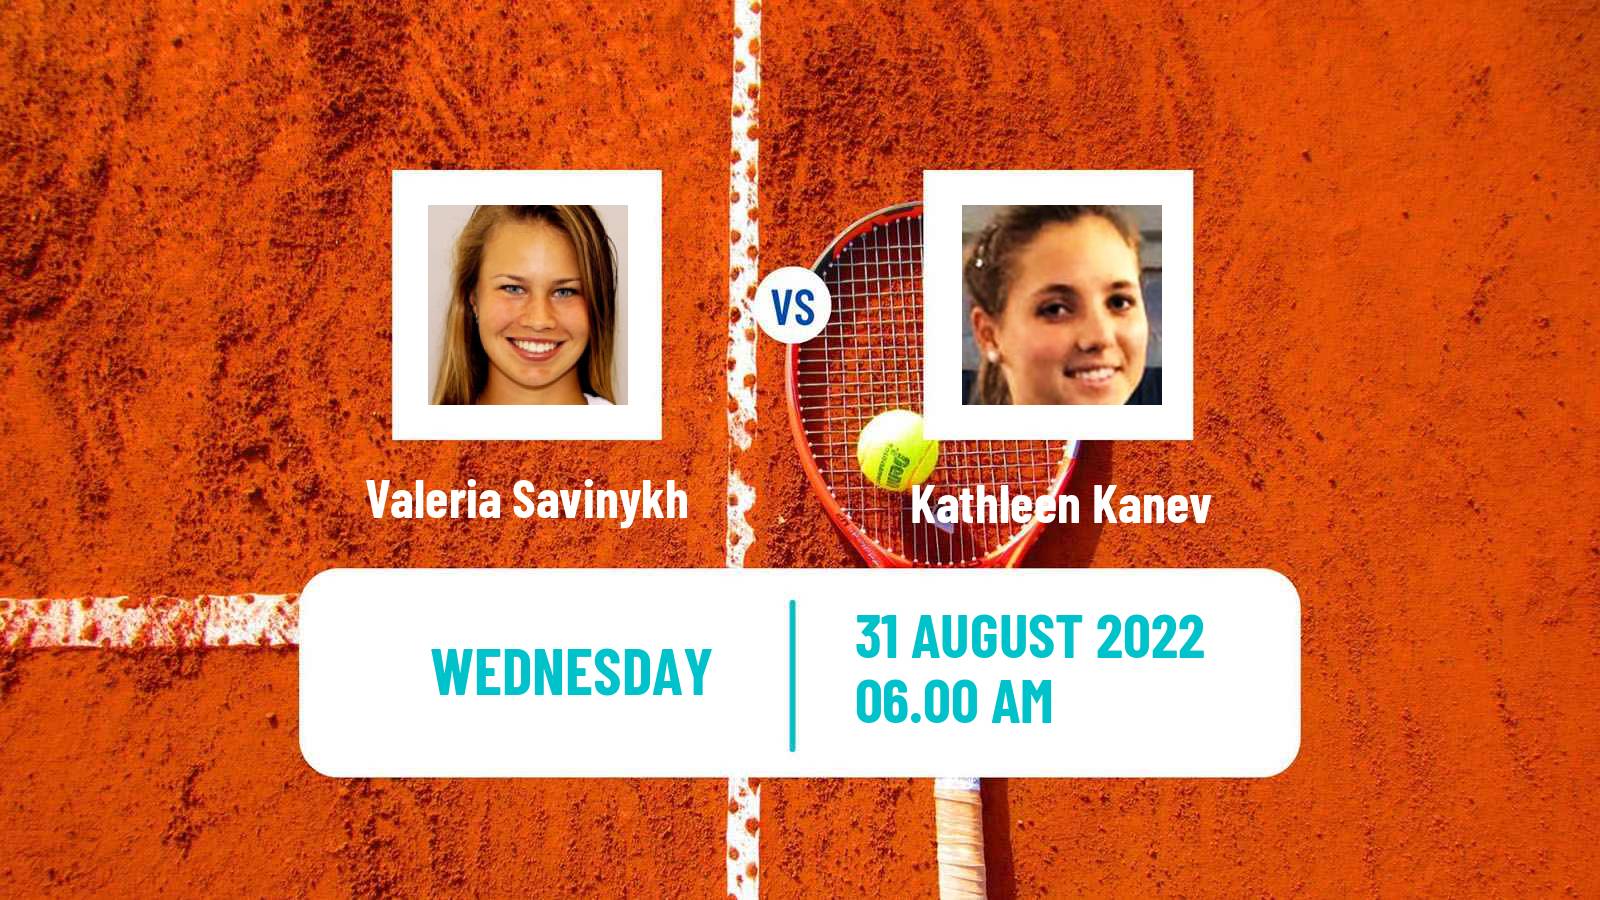 Tennis ITF Tournaments Valeria Savinykh - Kathleen Kanev